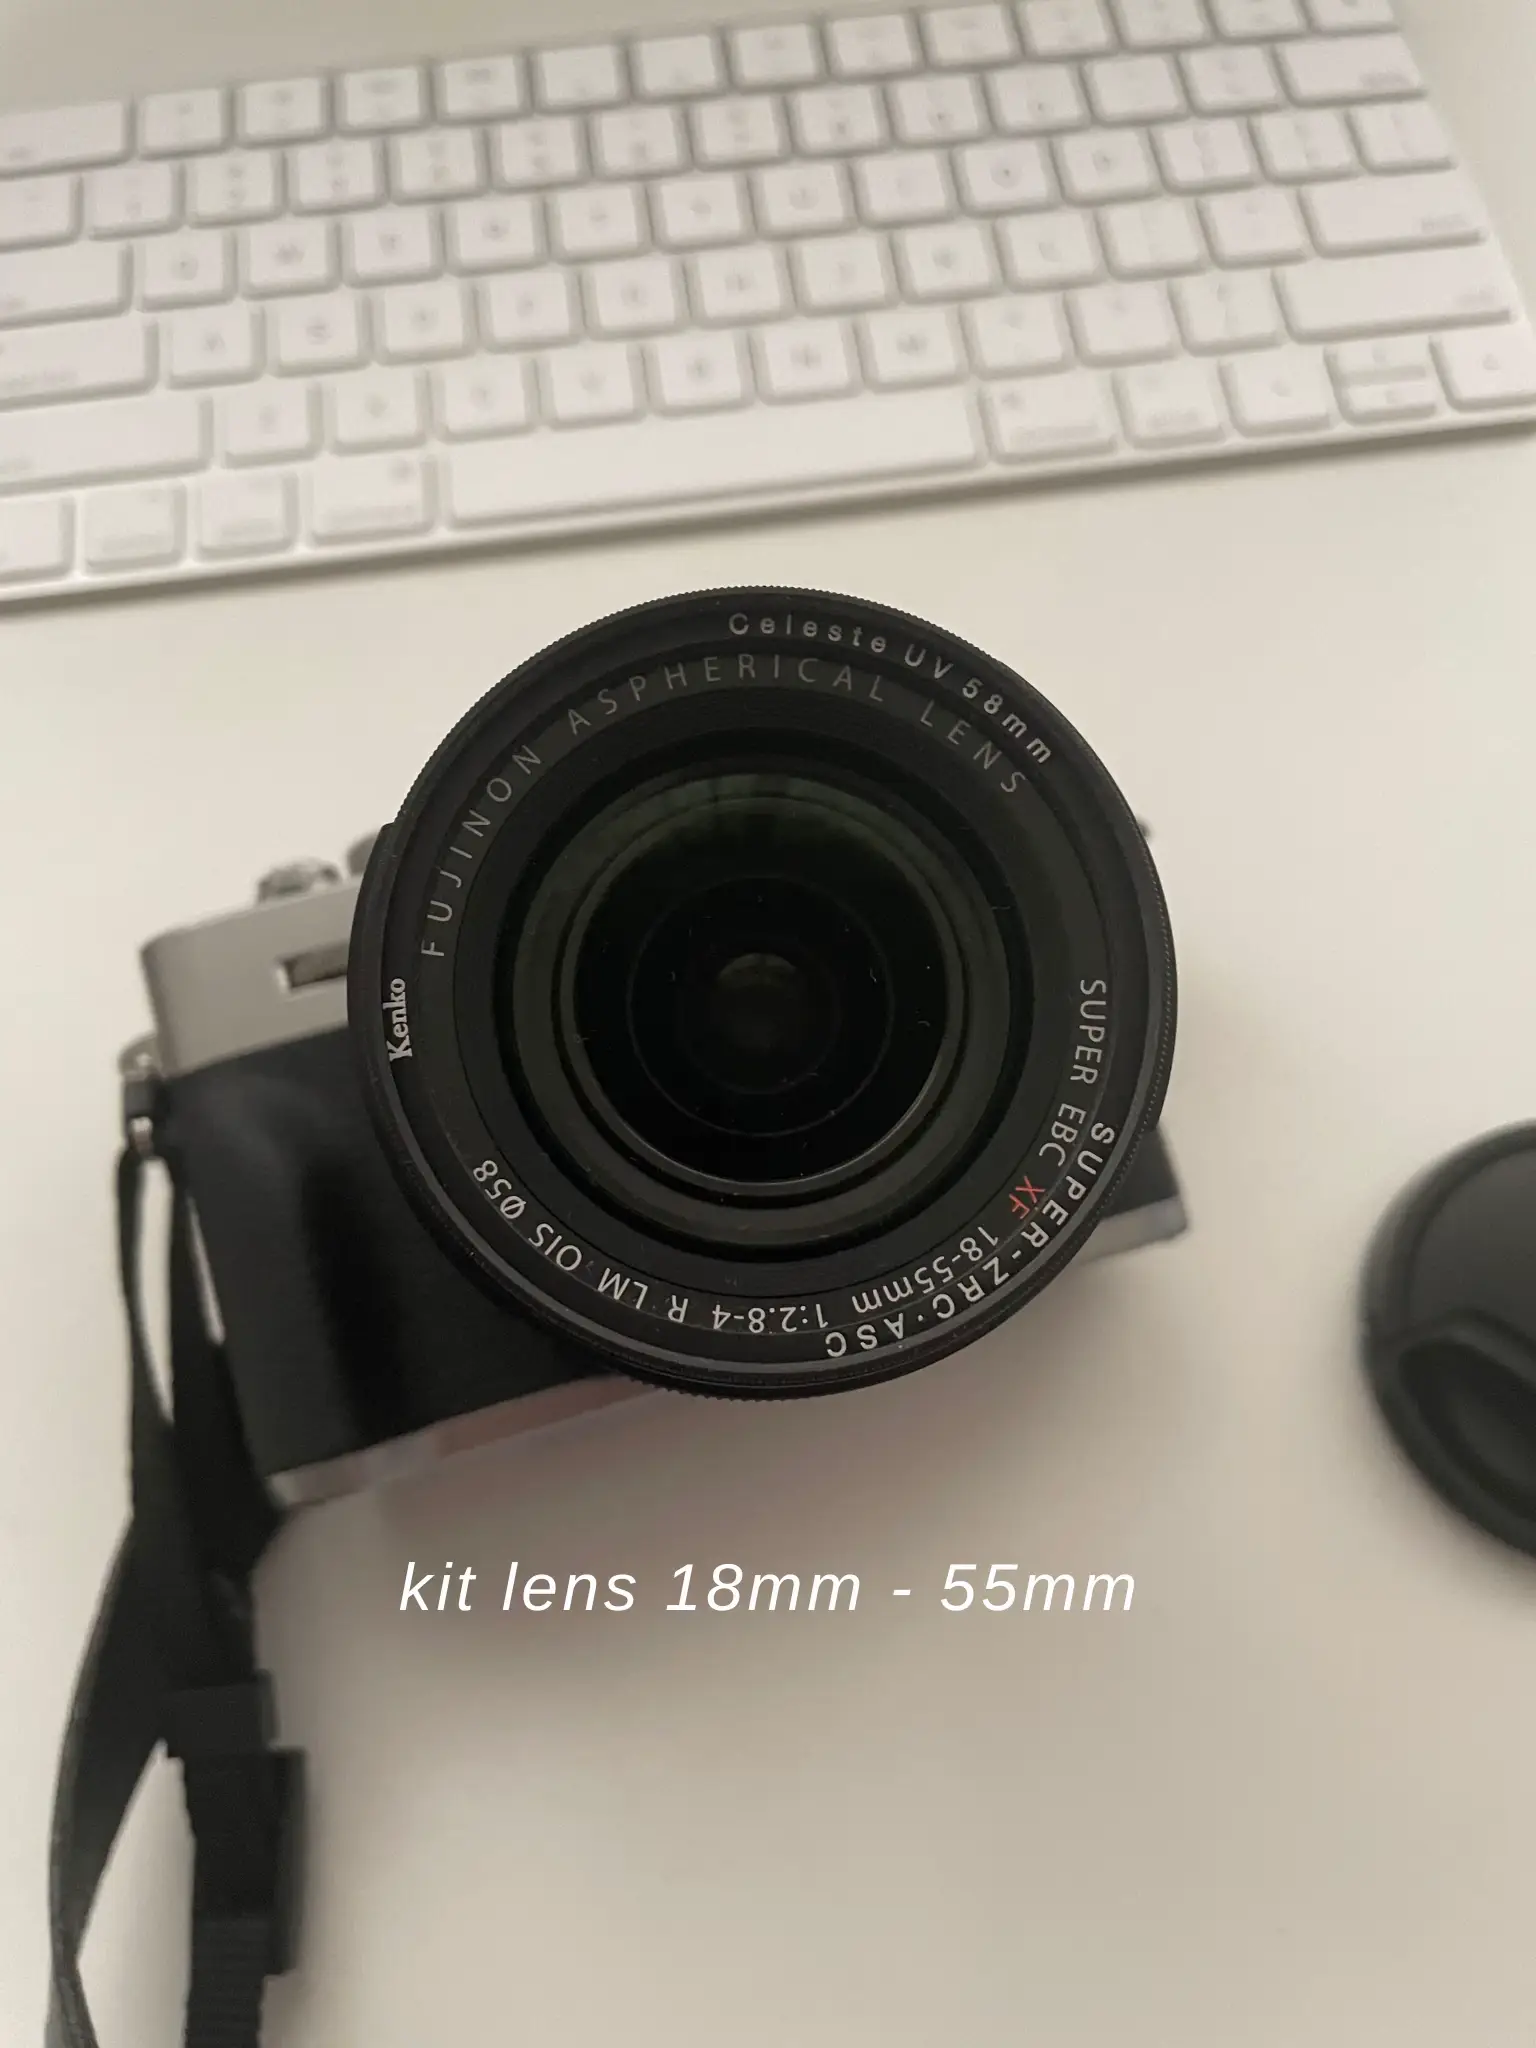 Fujifilm XT30 II XF 18-55mm, Photography, Cameras on Carousell